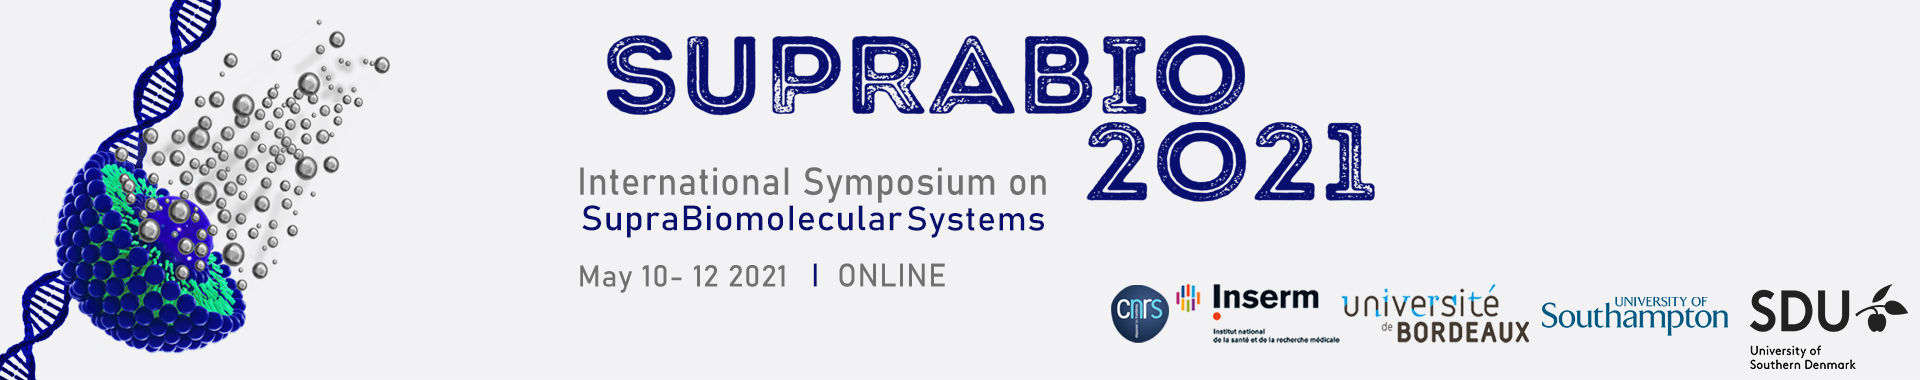 International symposium on suprabiomolecular systems - SUPRABIO 2019